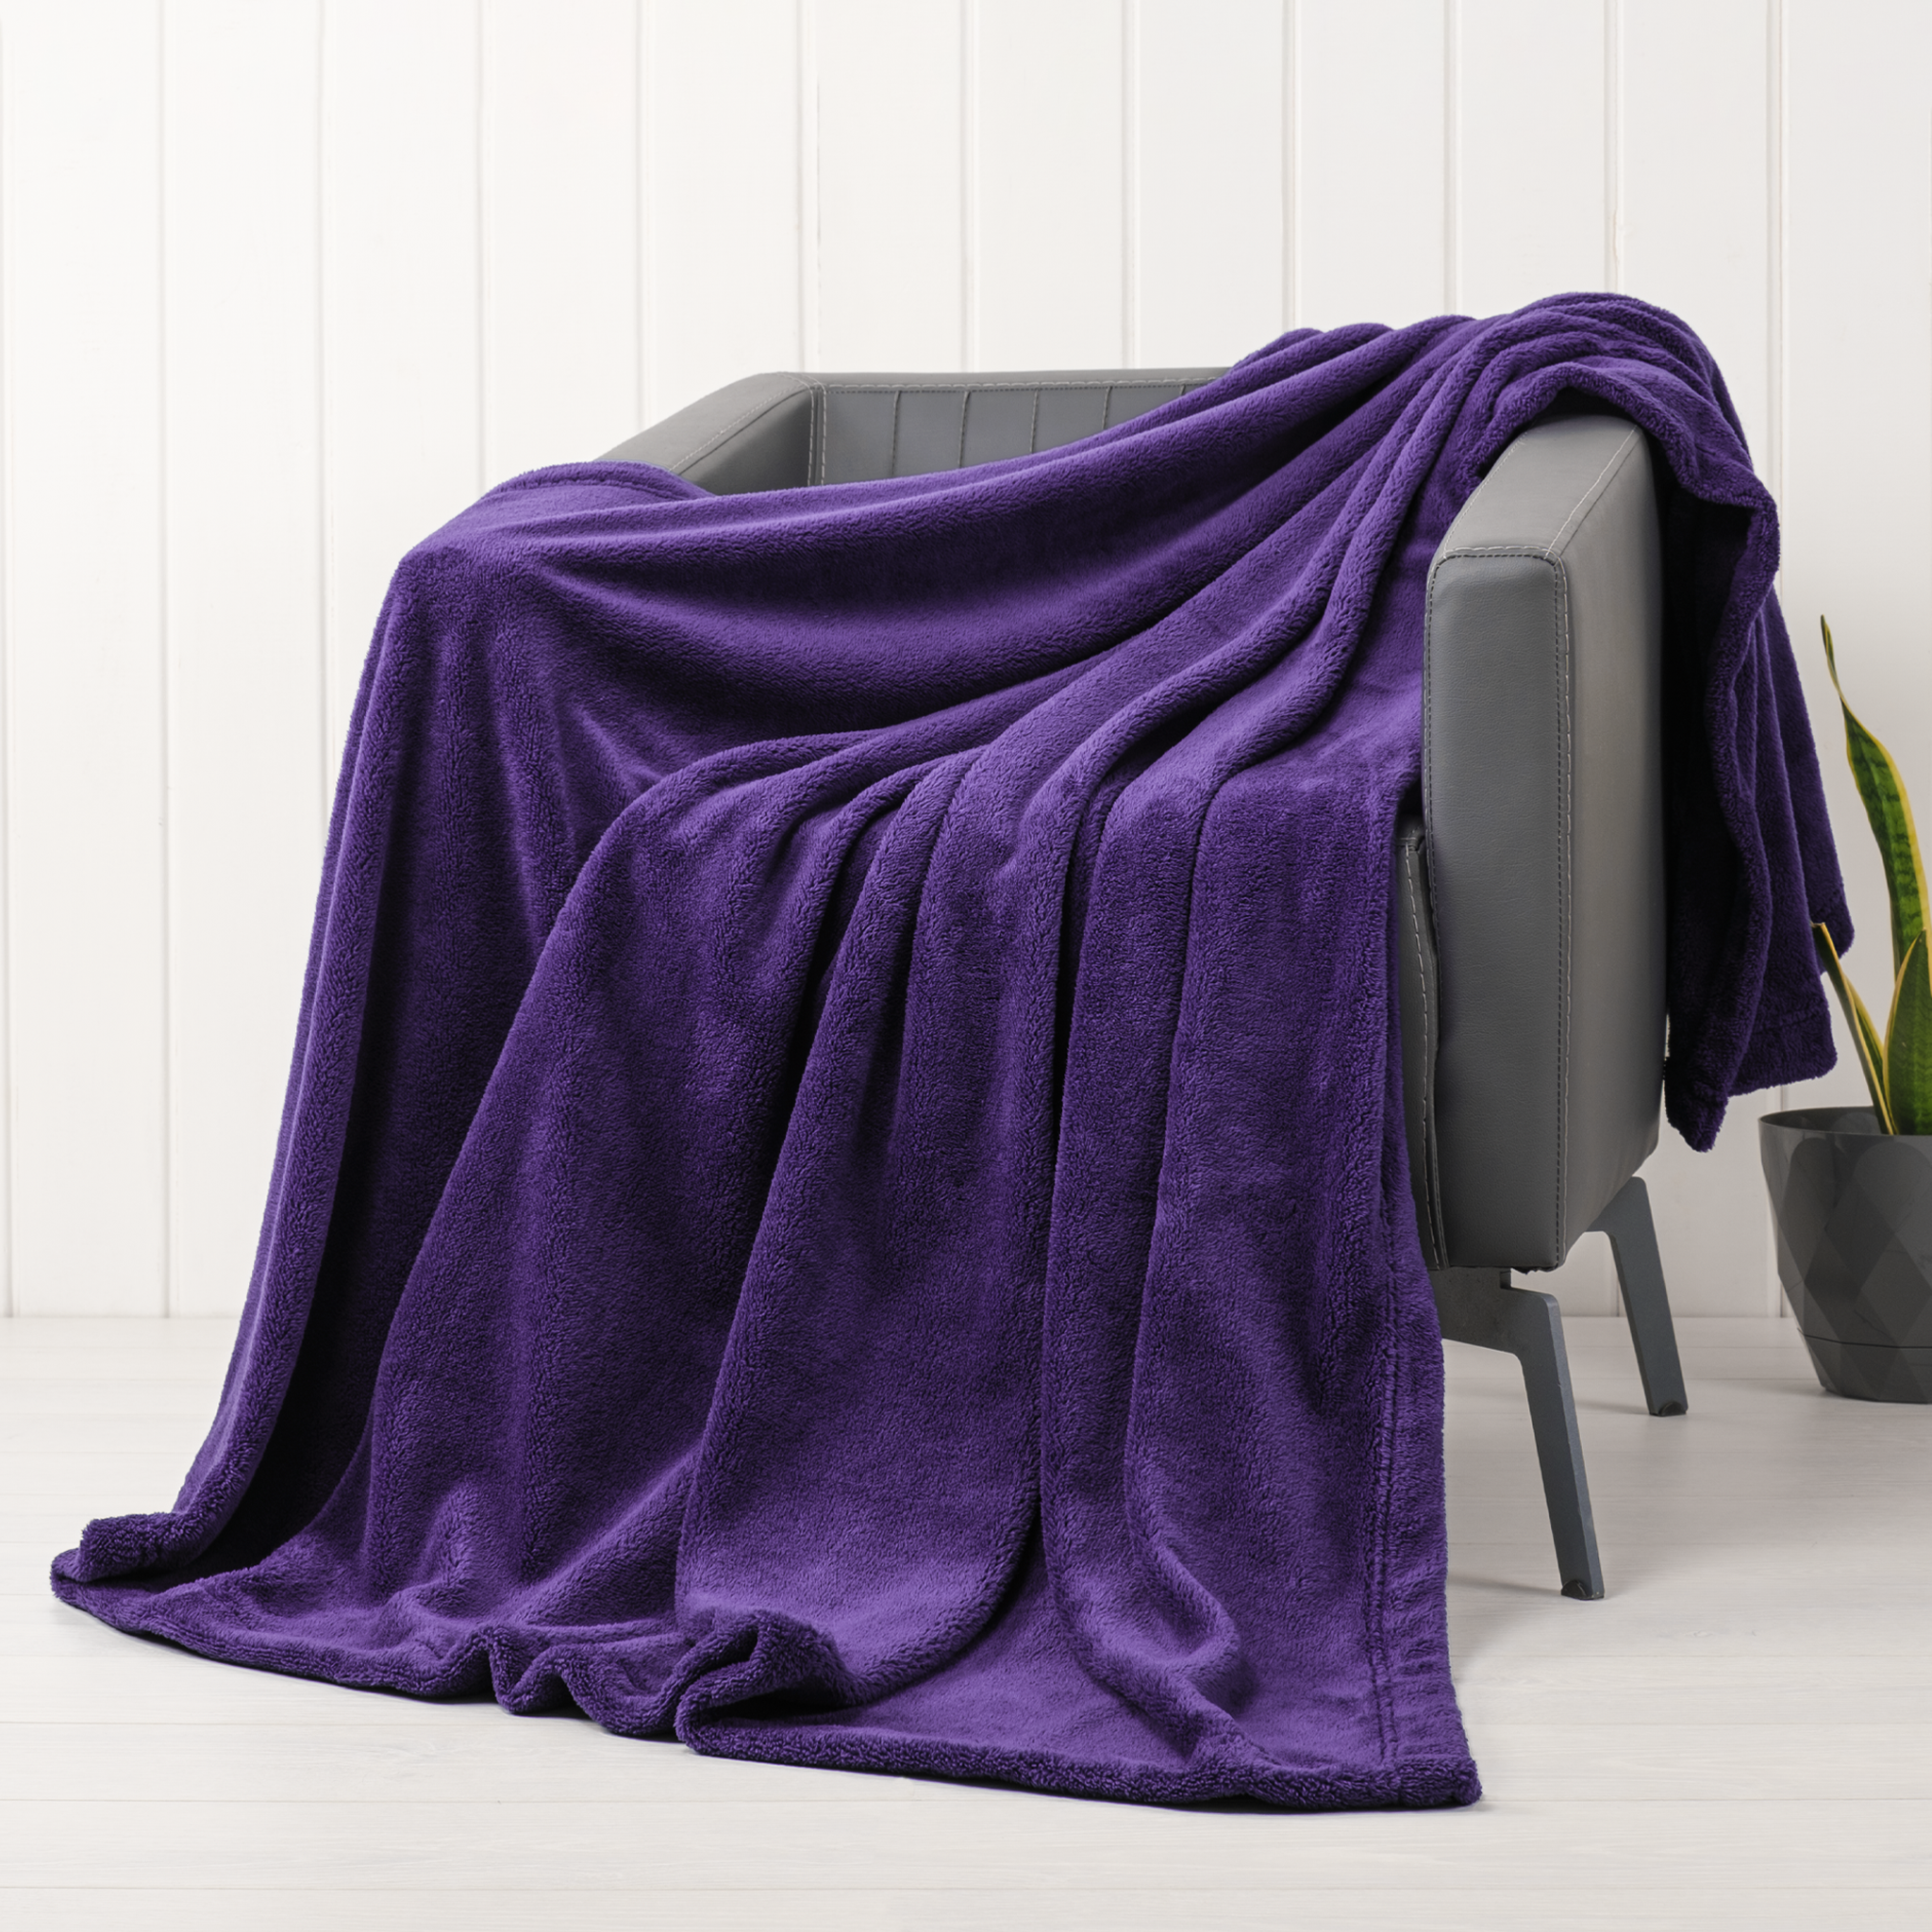 American Soft Linen - Bedding Fleece Blanket - Wholesale - 15 Set Case Pack - Twin Size 60x80 inches - Purple - 1